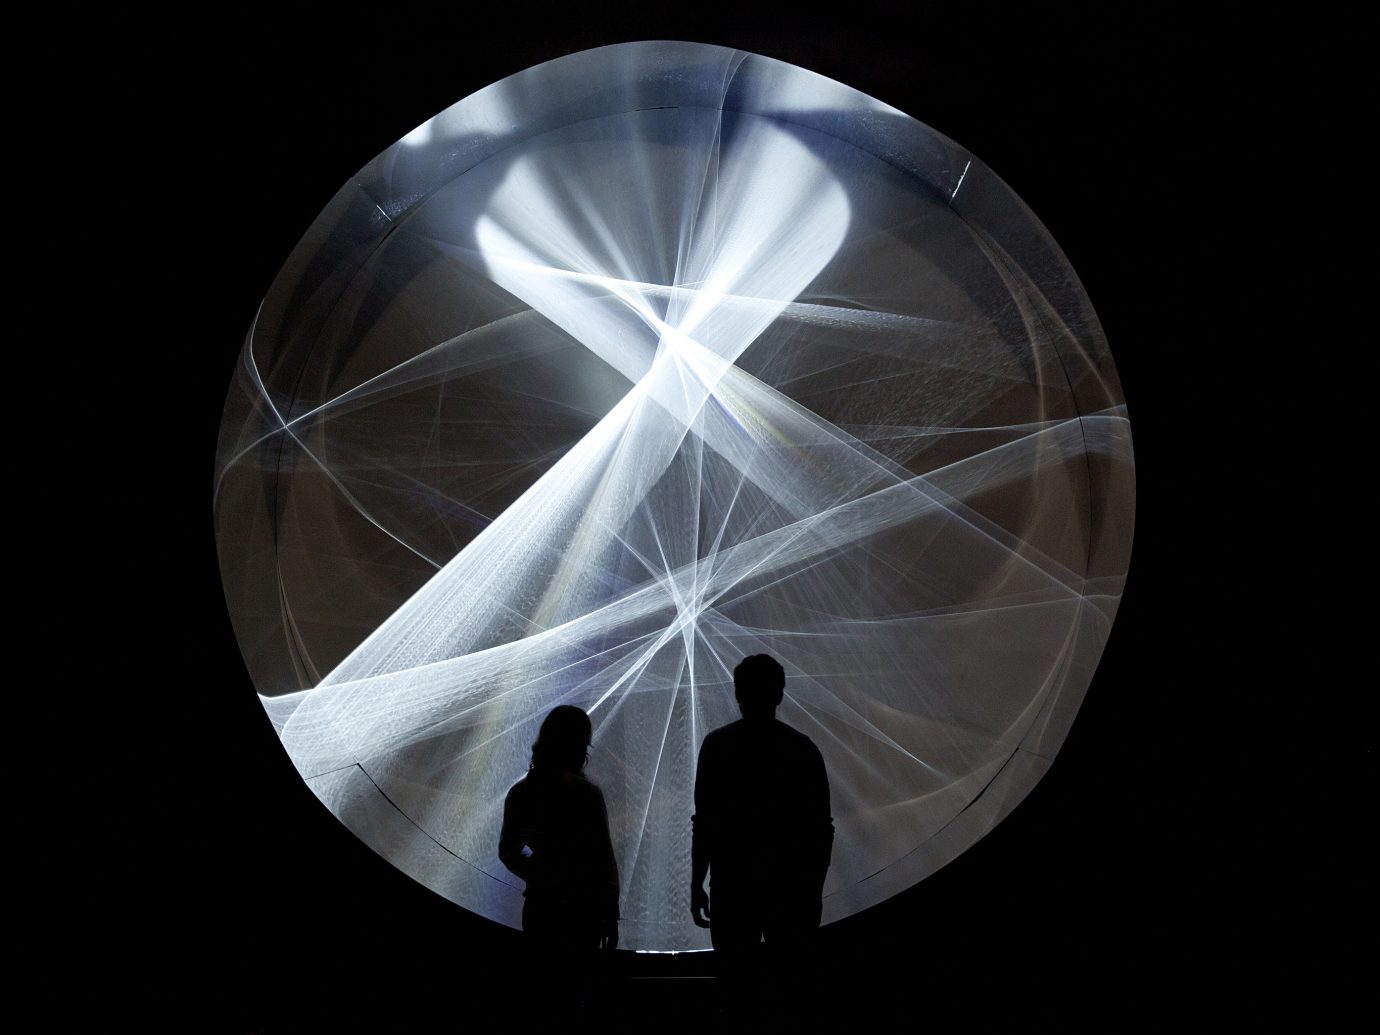 Arts + Culture light circle sandglass organ sphere shape reflection symmetry dark